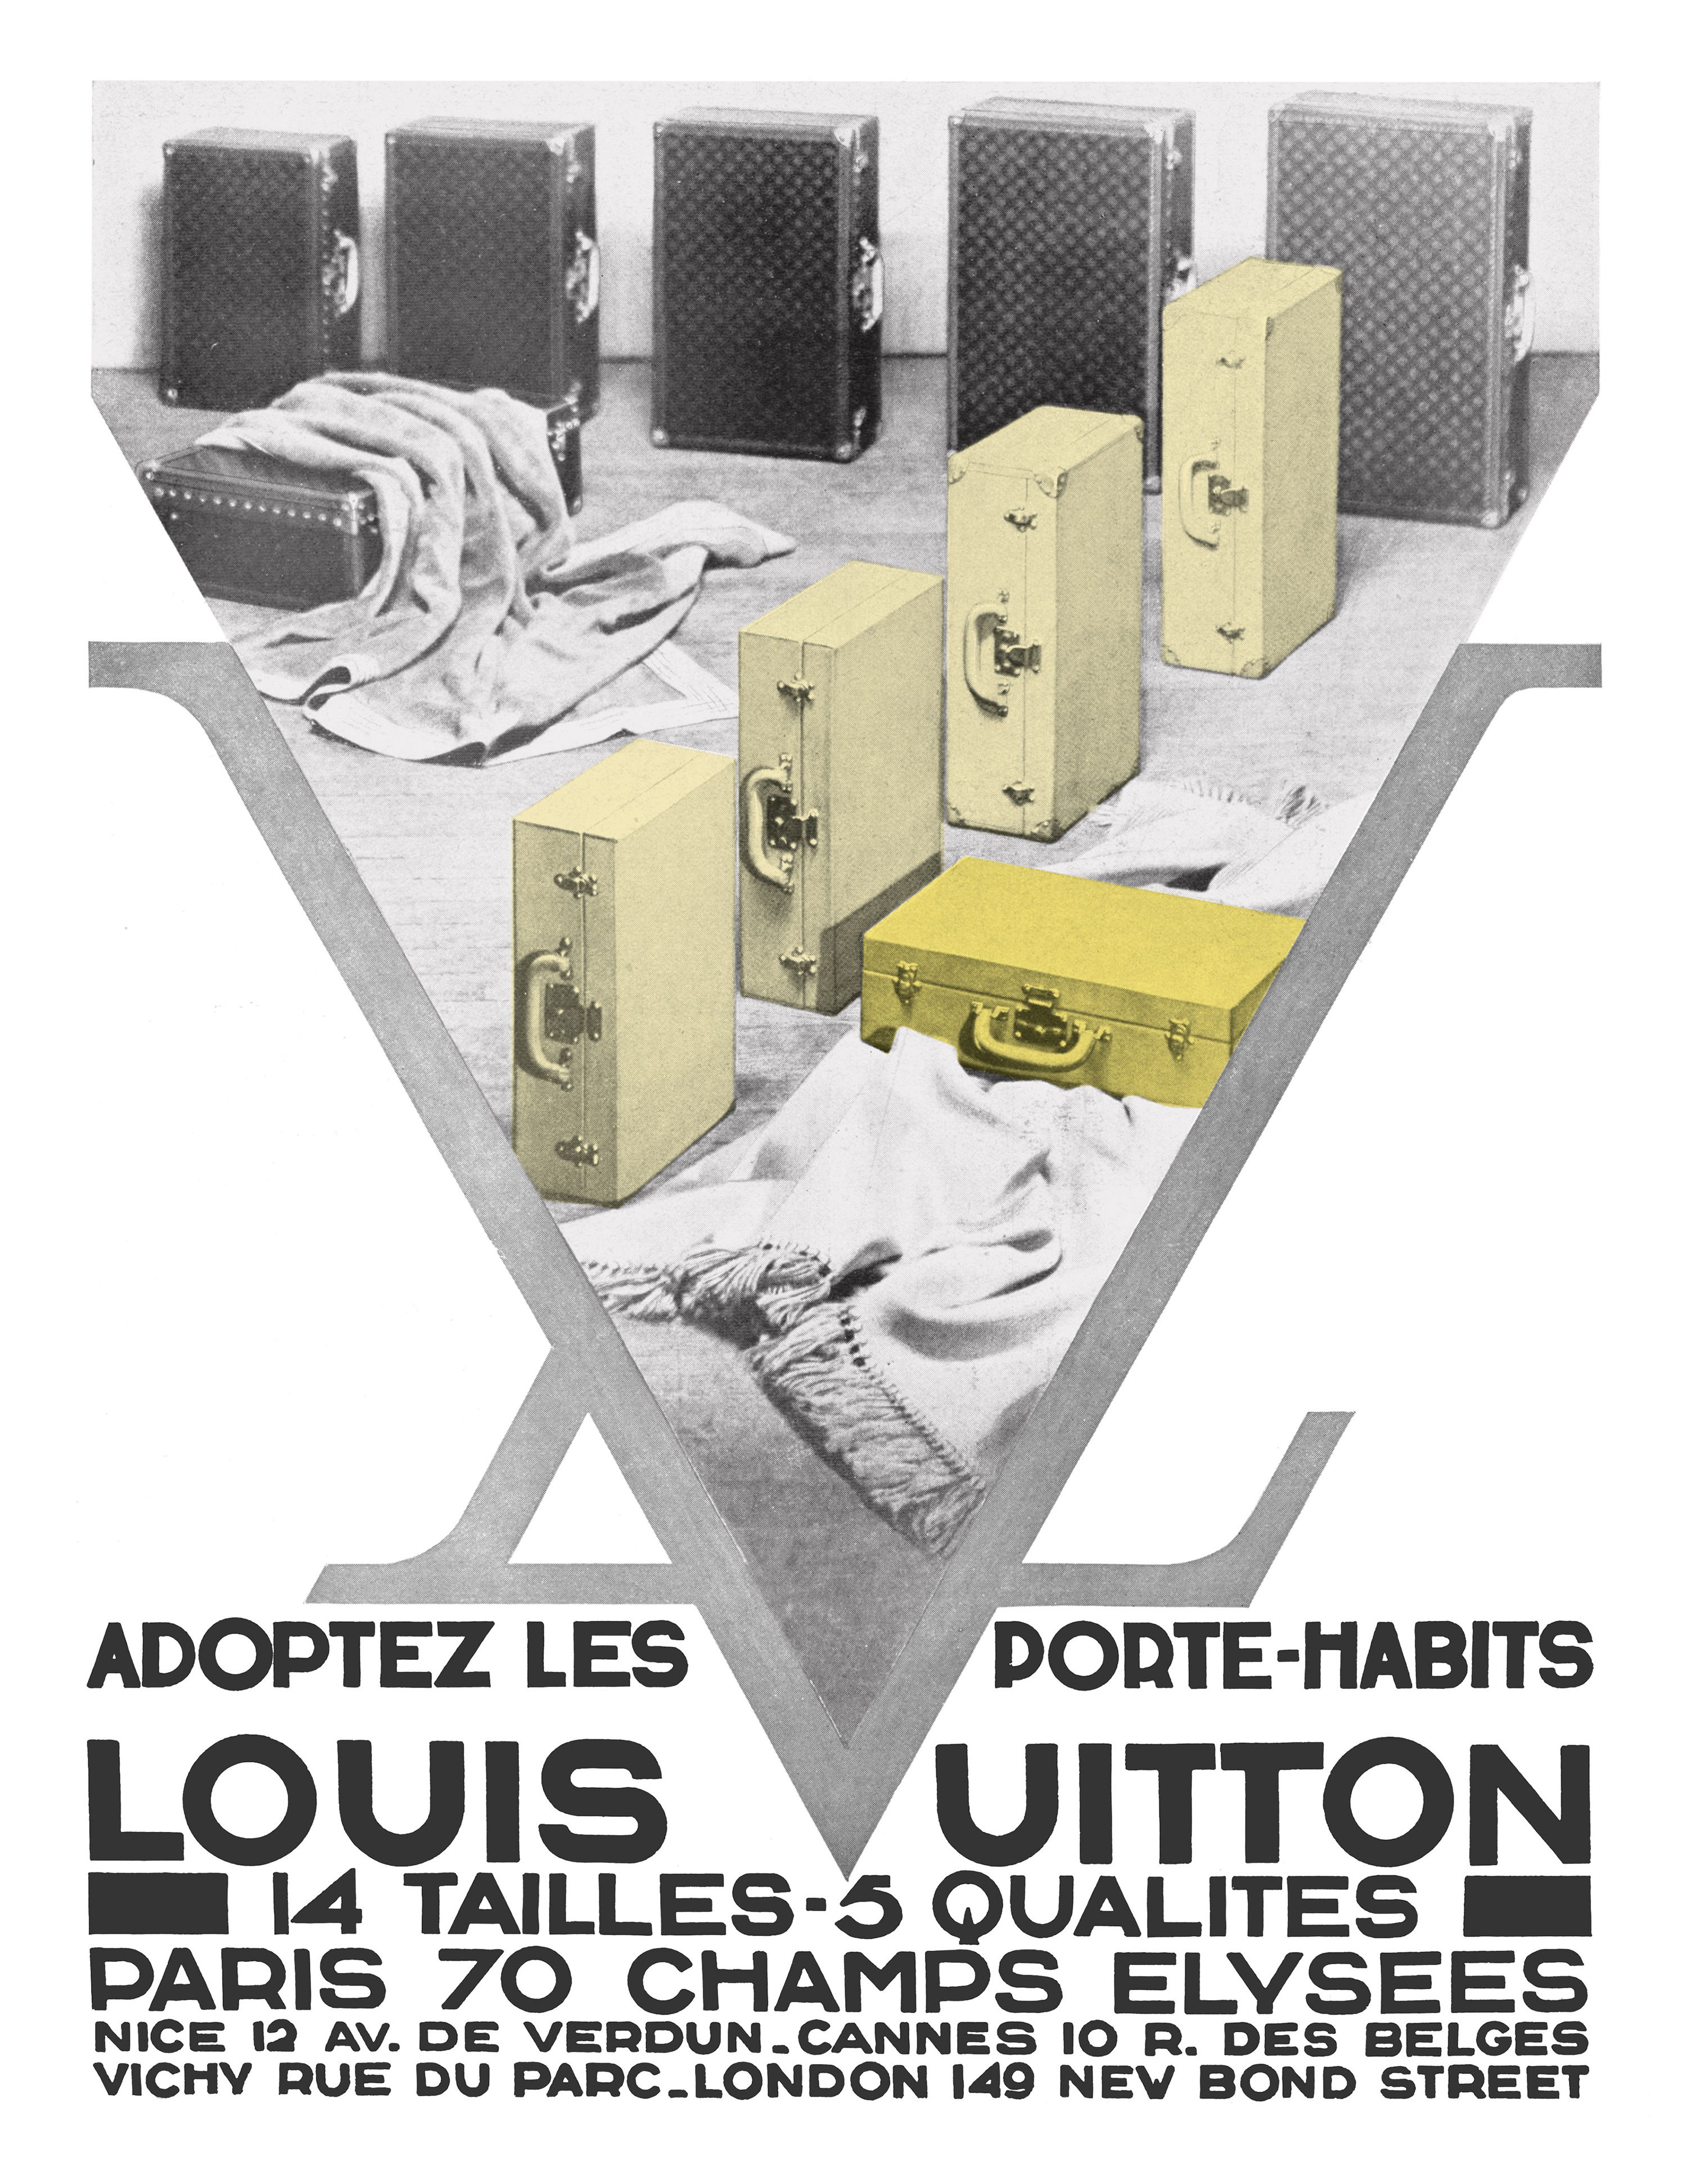 History of All Logos: Luis Vuitton Logo History